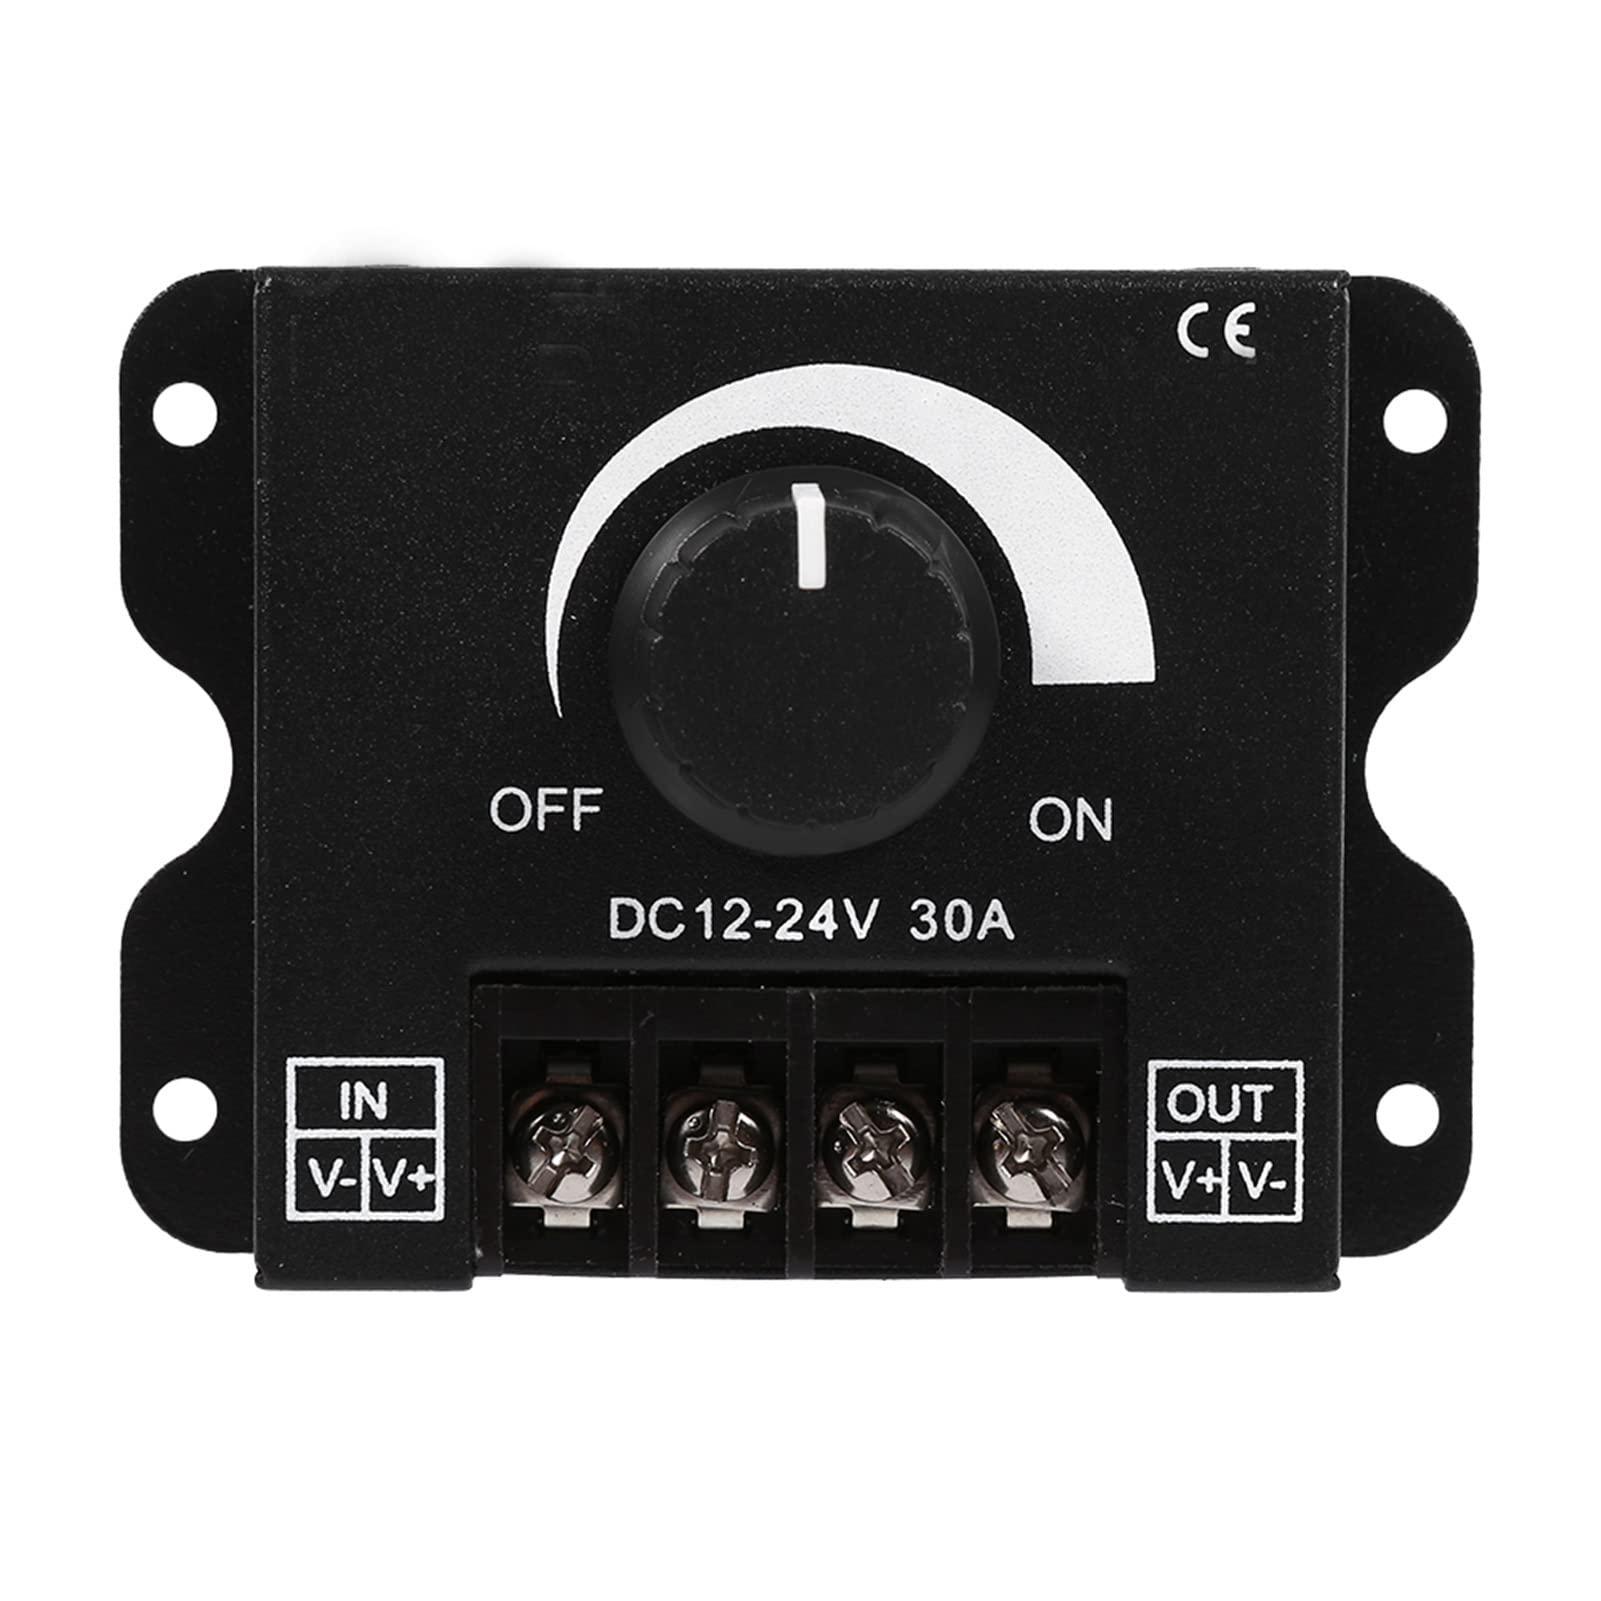 Strip Led Dimmer,12V-24V 30A Led Switch Dimmer Controller Manual Operation for Strip Light Single Color